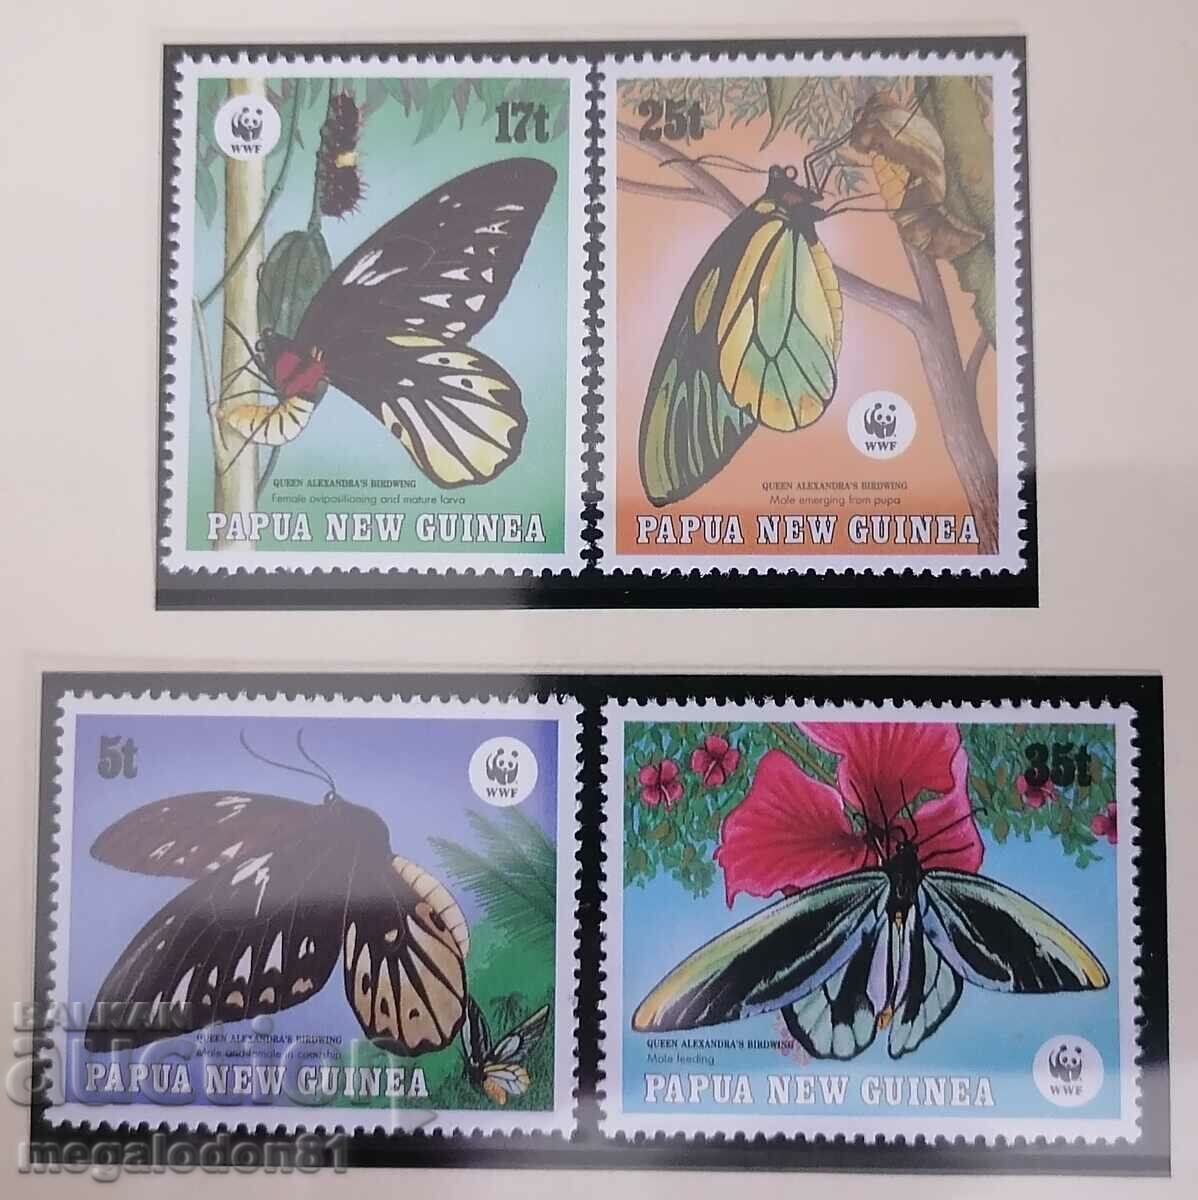 Papua New Guinea - WWF, butterflies